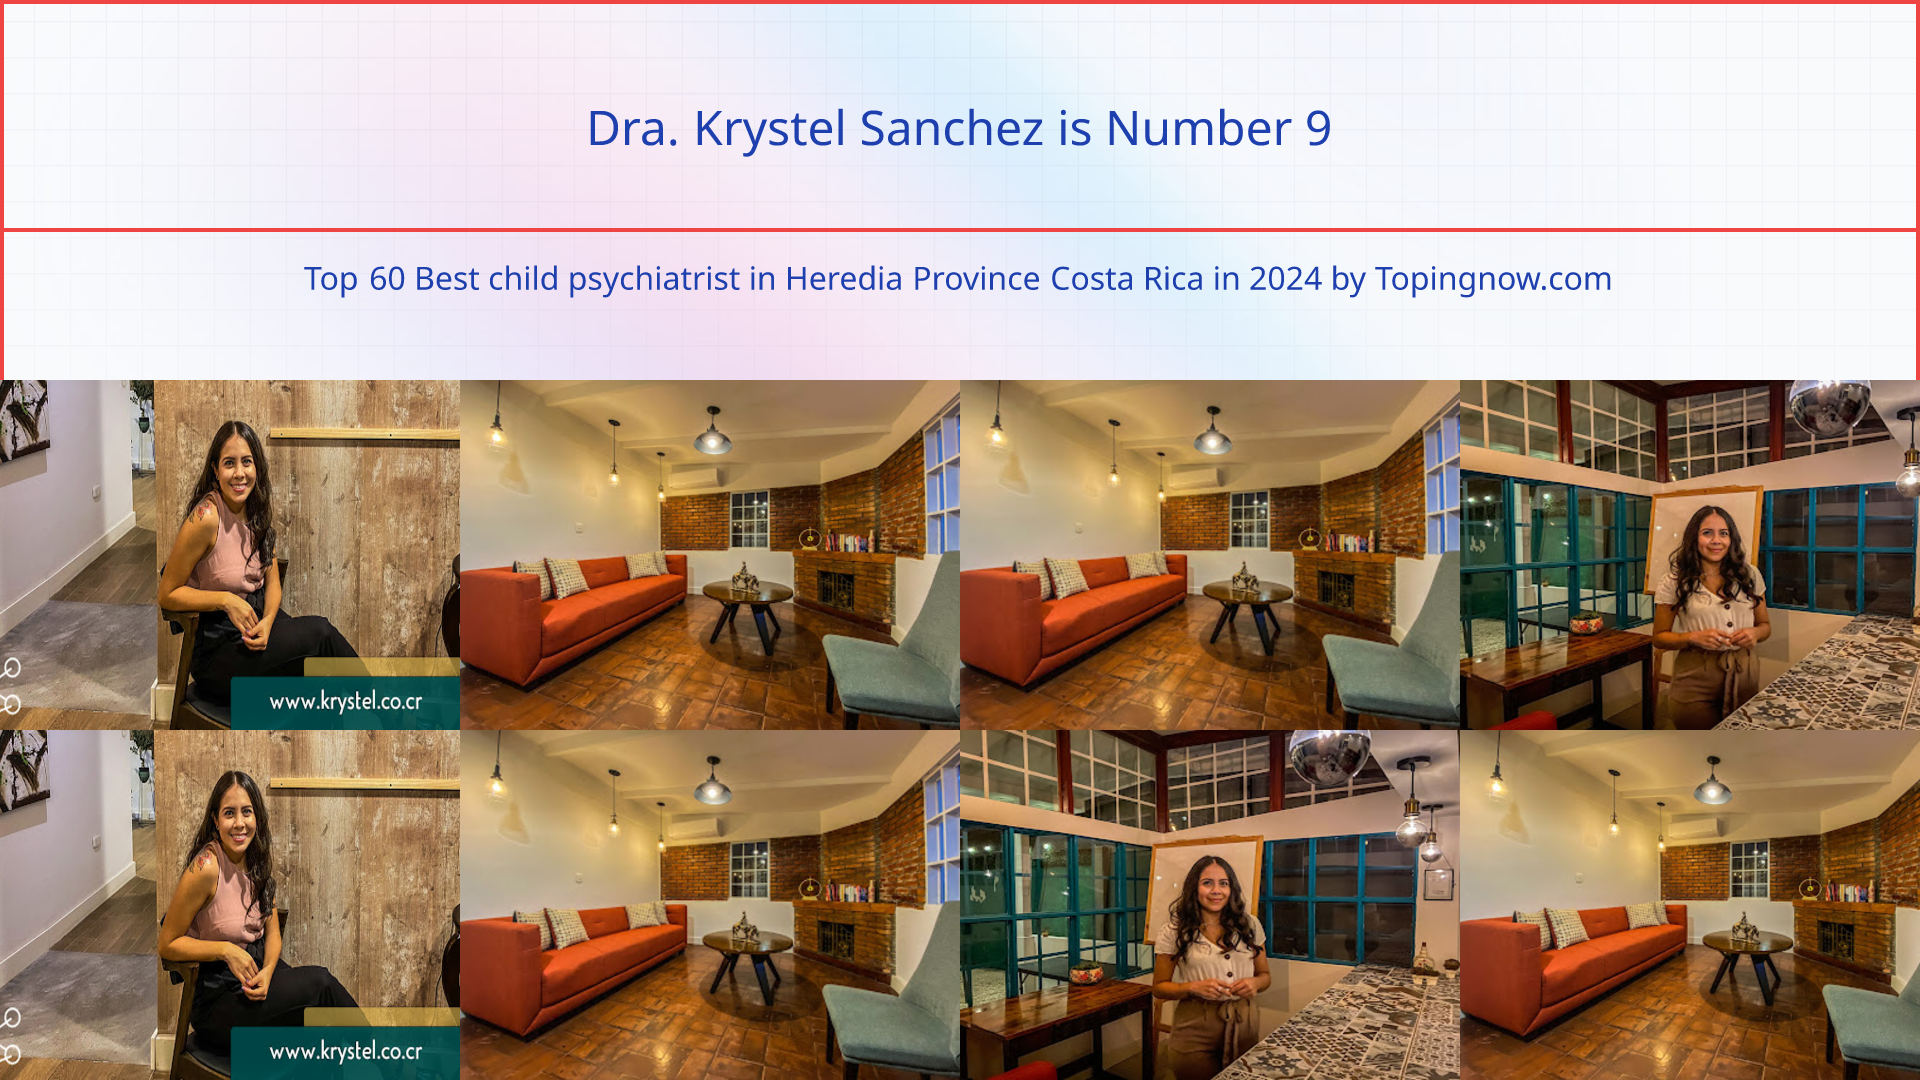 Dra. Krystel Sanchez: Top 60 Best child psychiatrist in Heredia Province Costa Rica in 2024